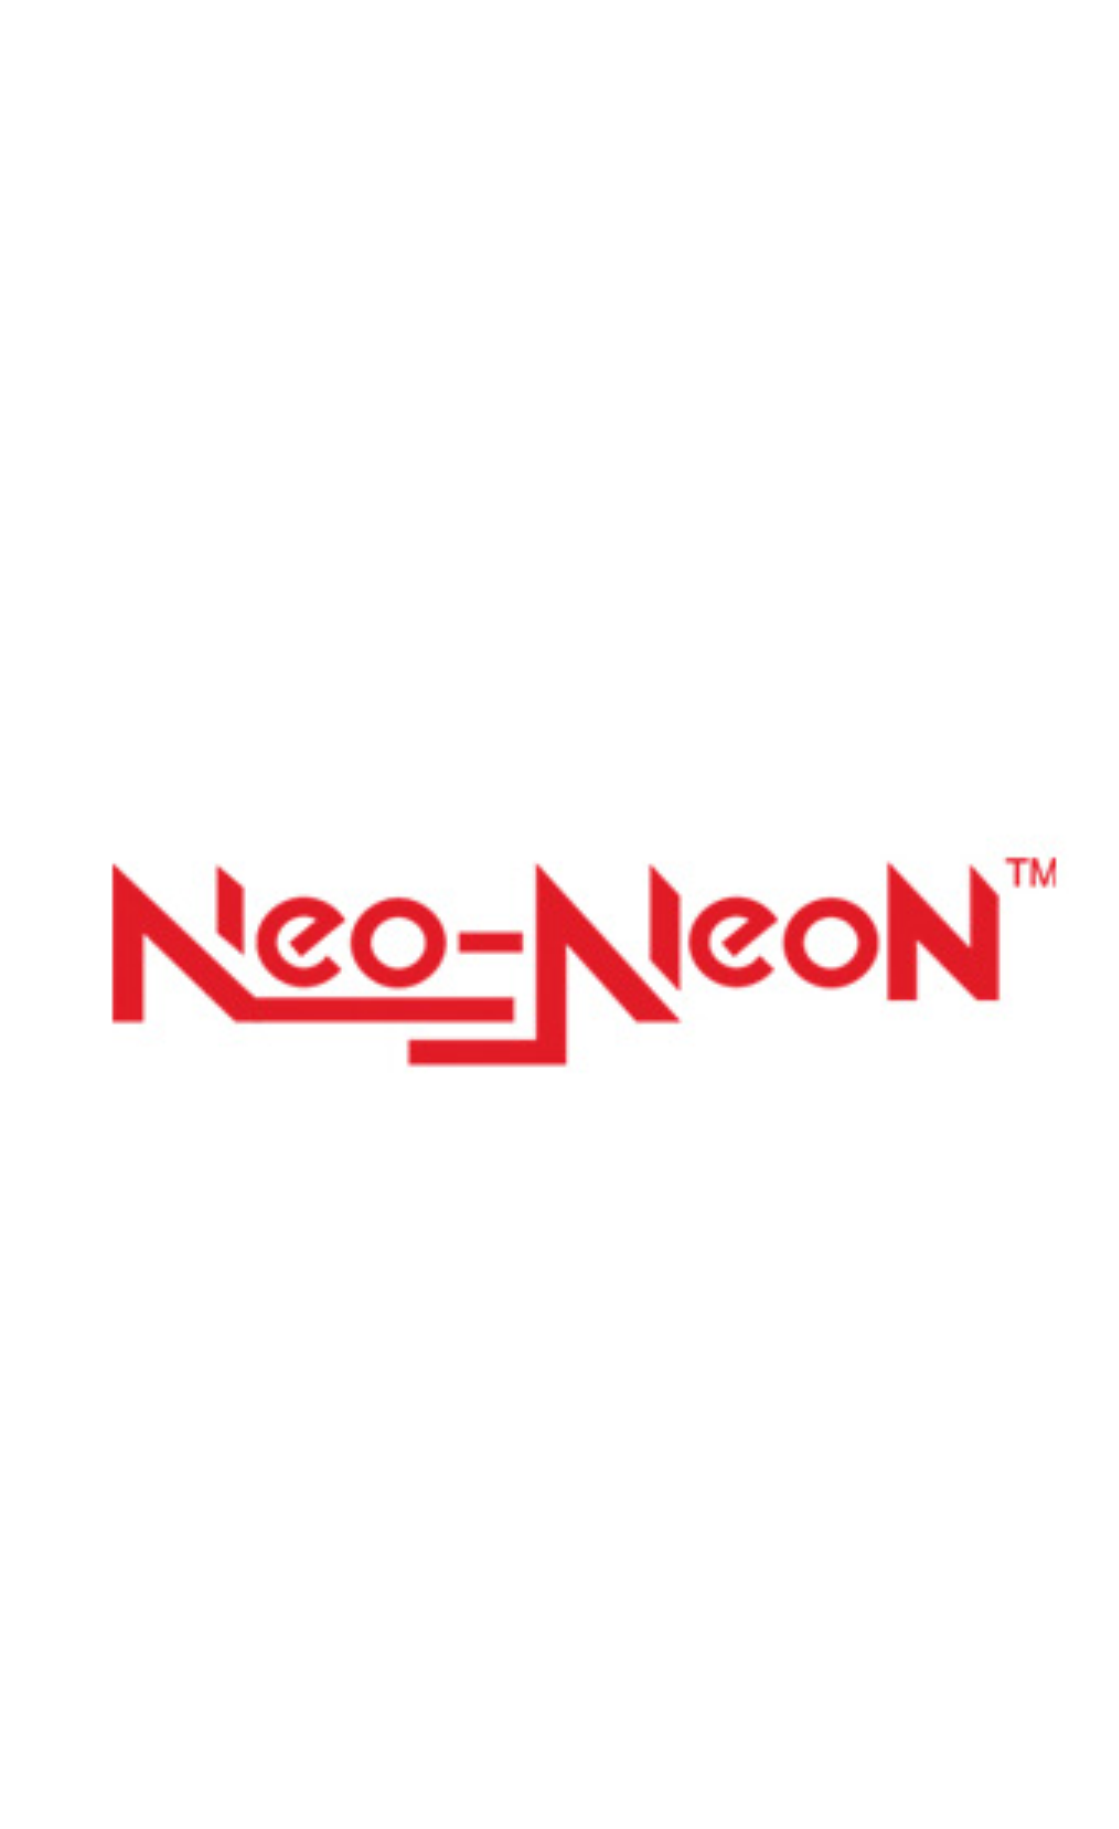 NeoNeon